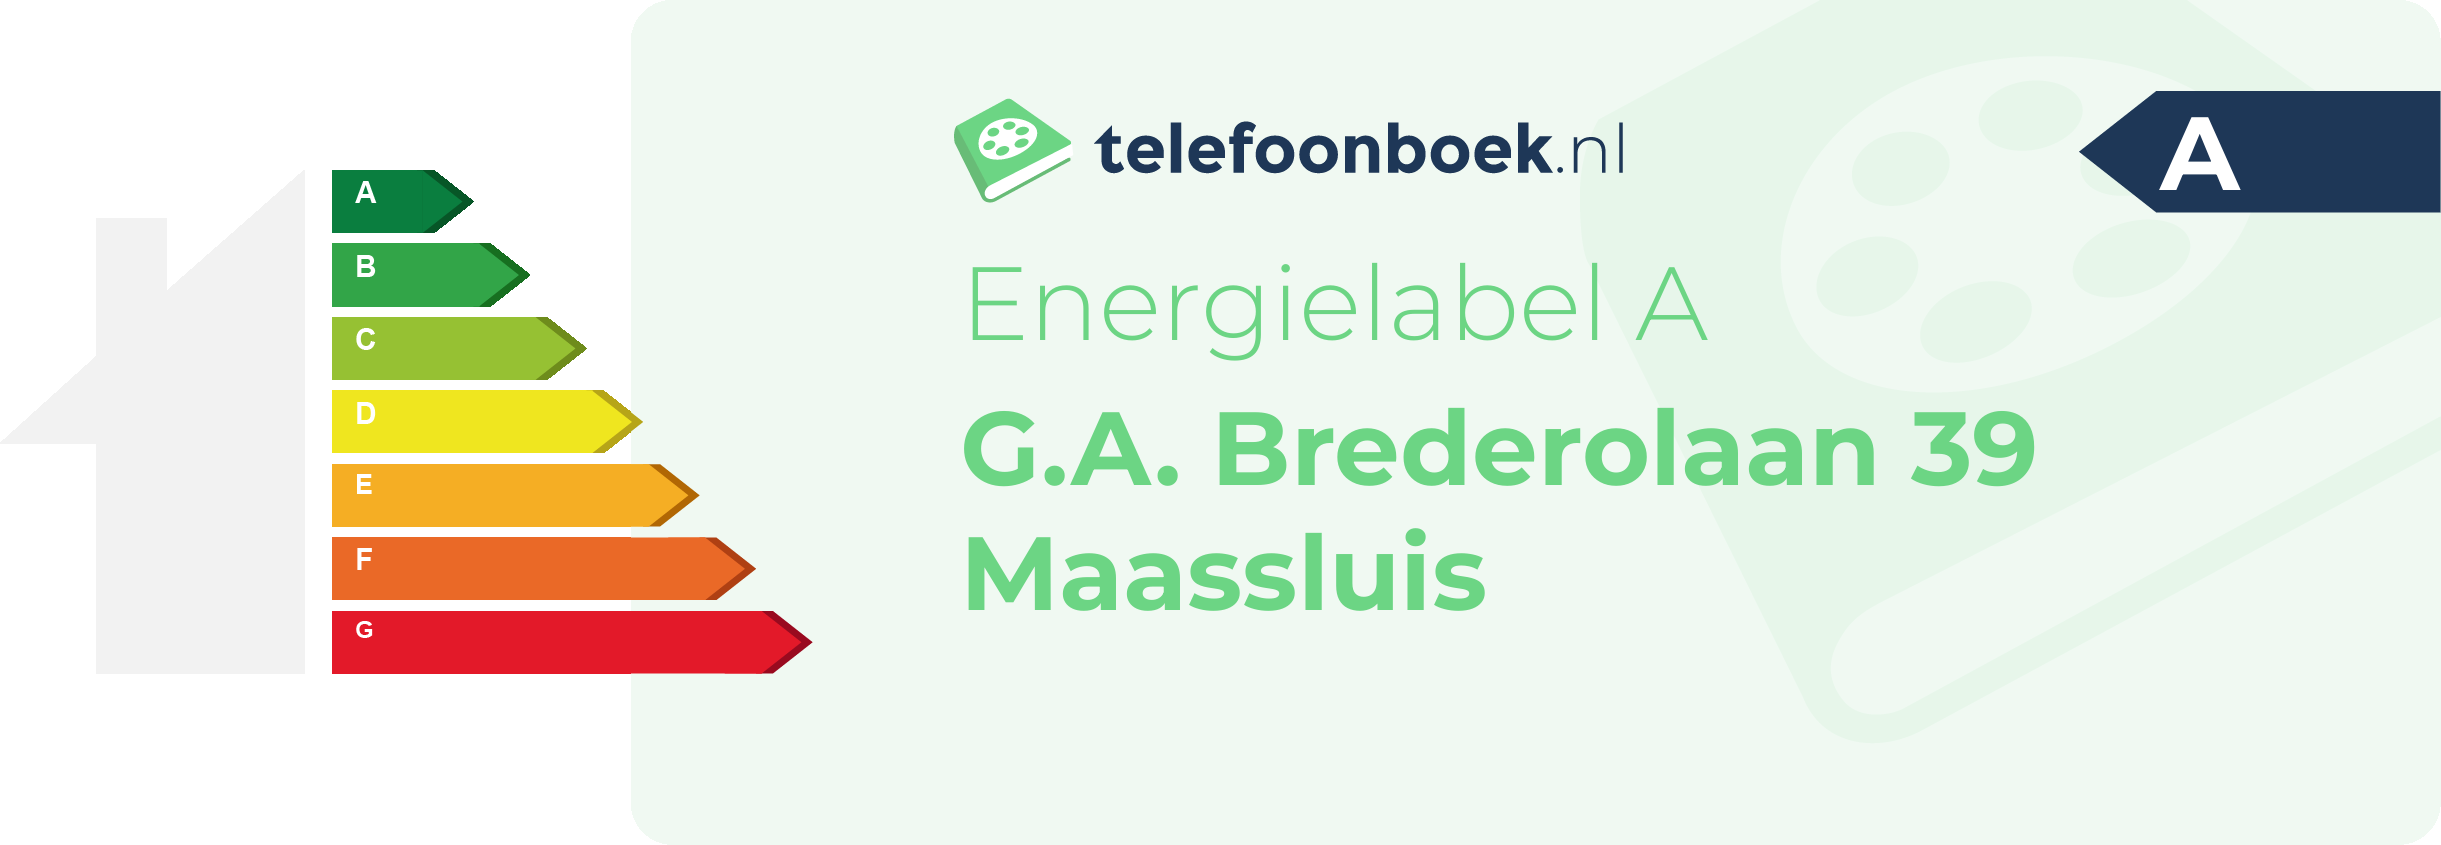 Energielabel G.A. Brederolaan 39 Maassluis